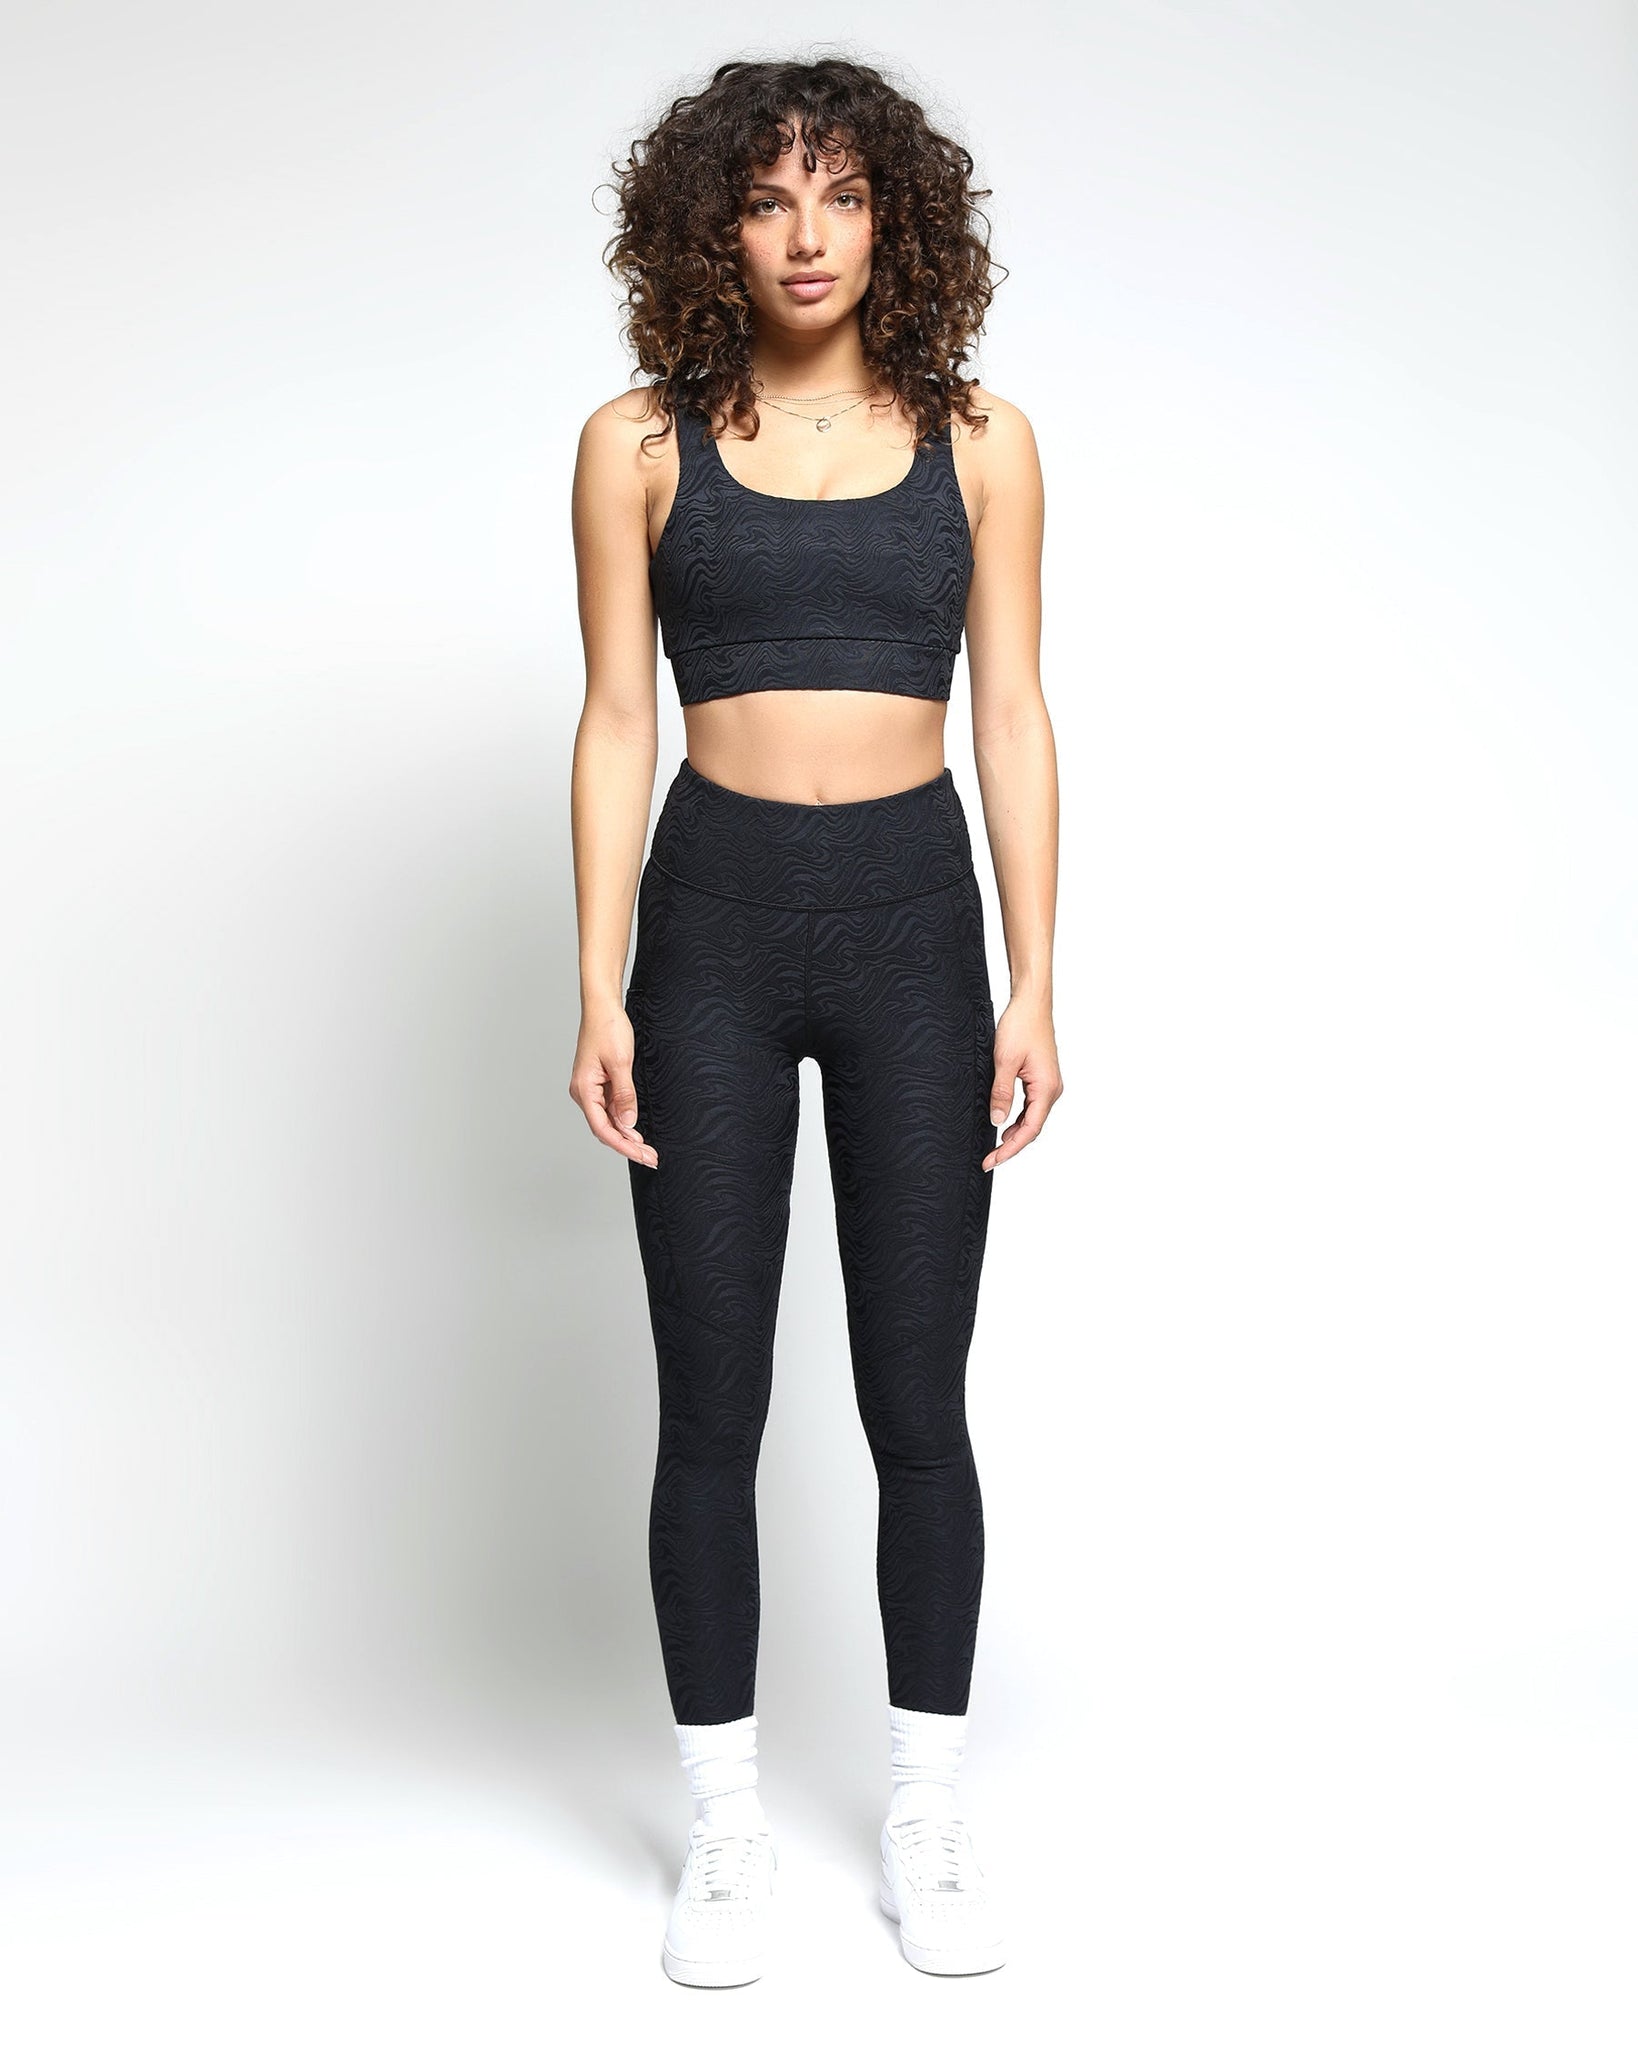 AthletIc Women DriWorks Grey White Black Colorblock Leggings Yoga Pants Lg  12-14